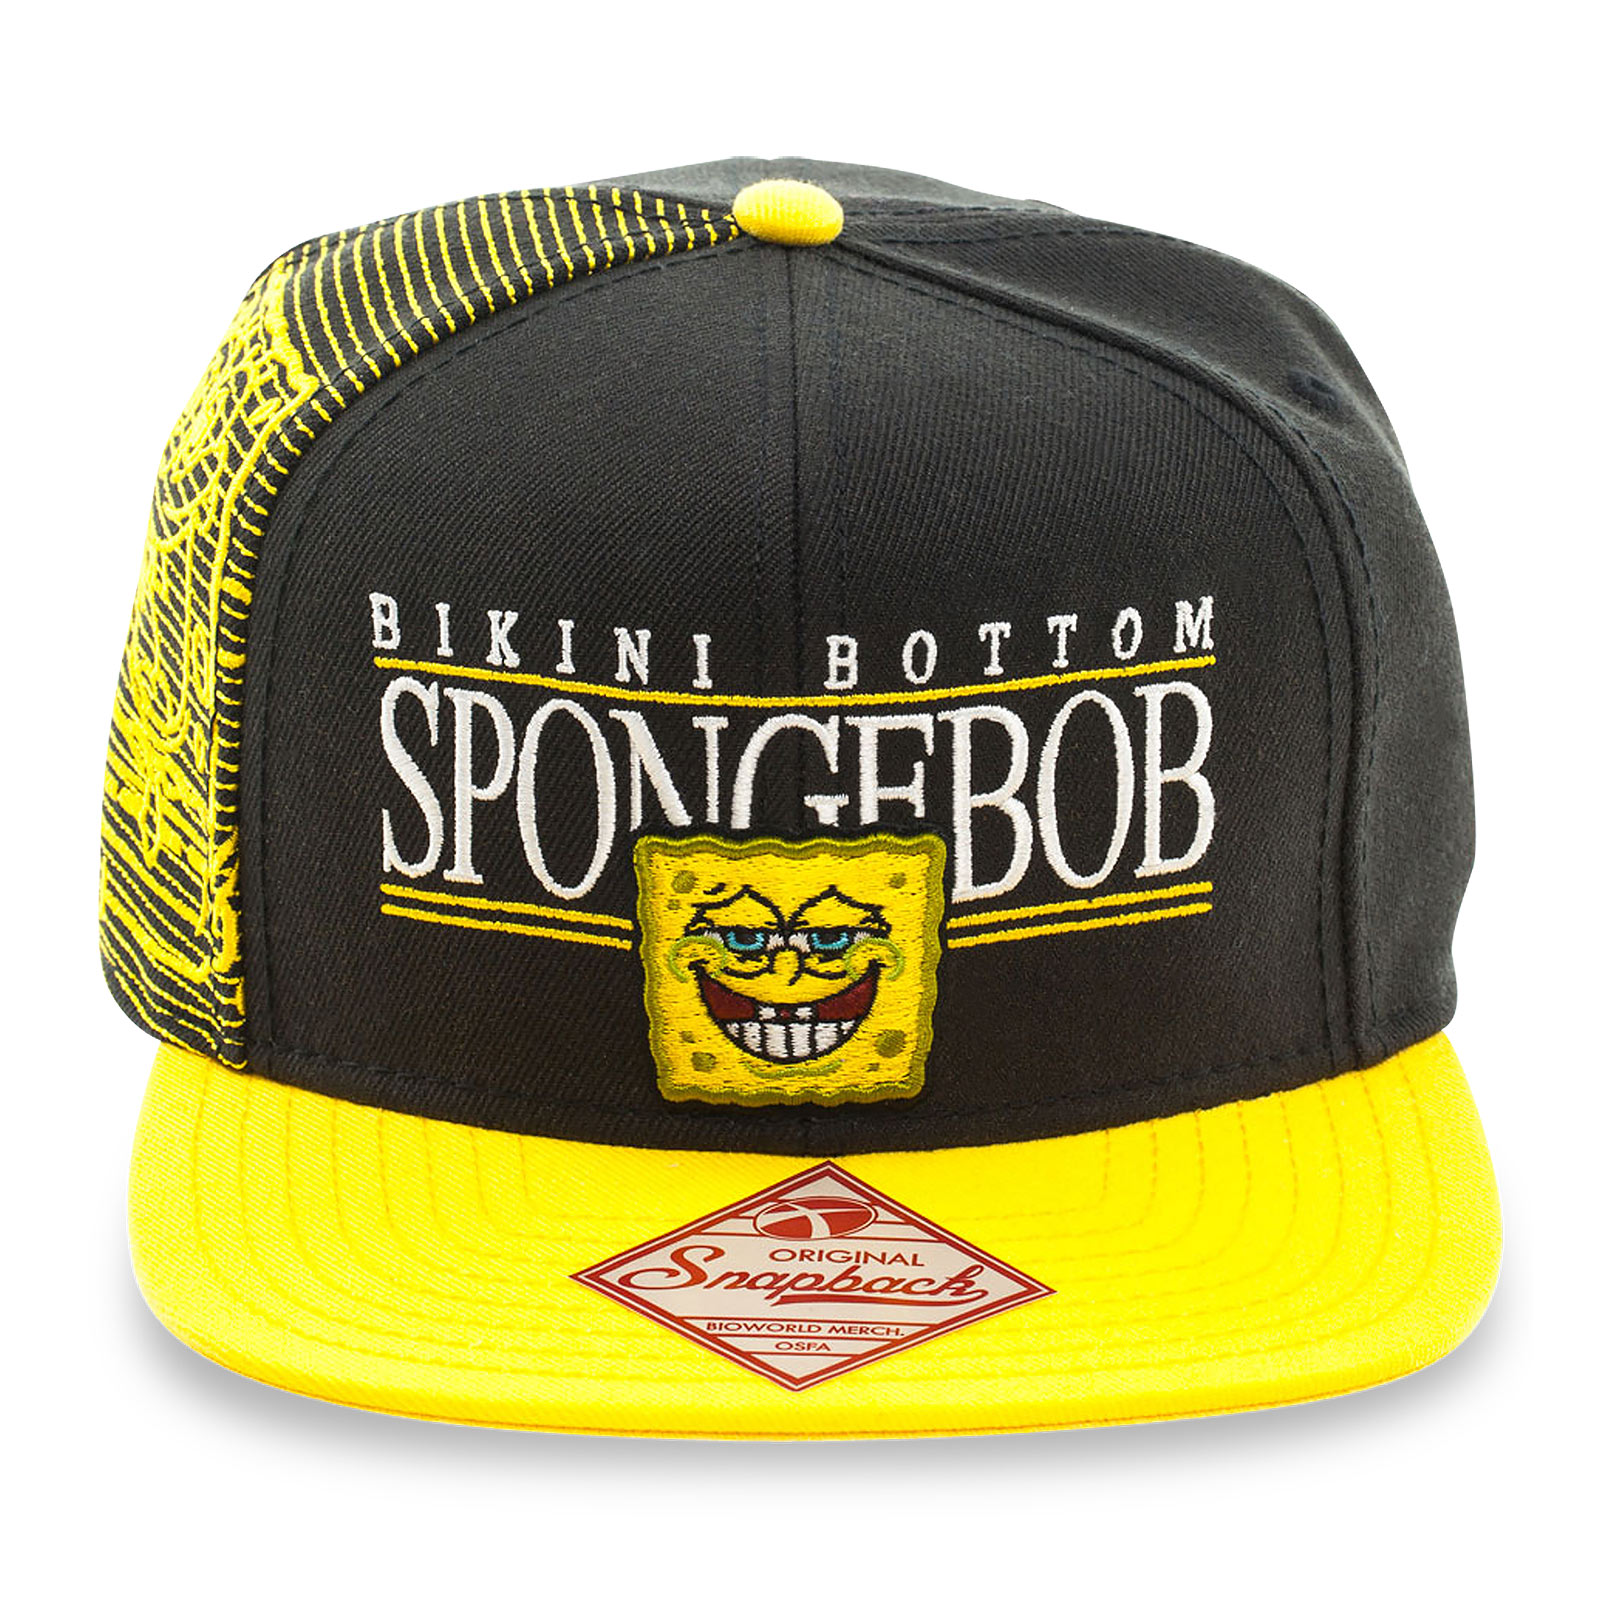 SpongeBob - Bikini Bottom Snapback Cap